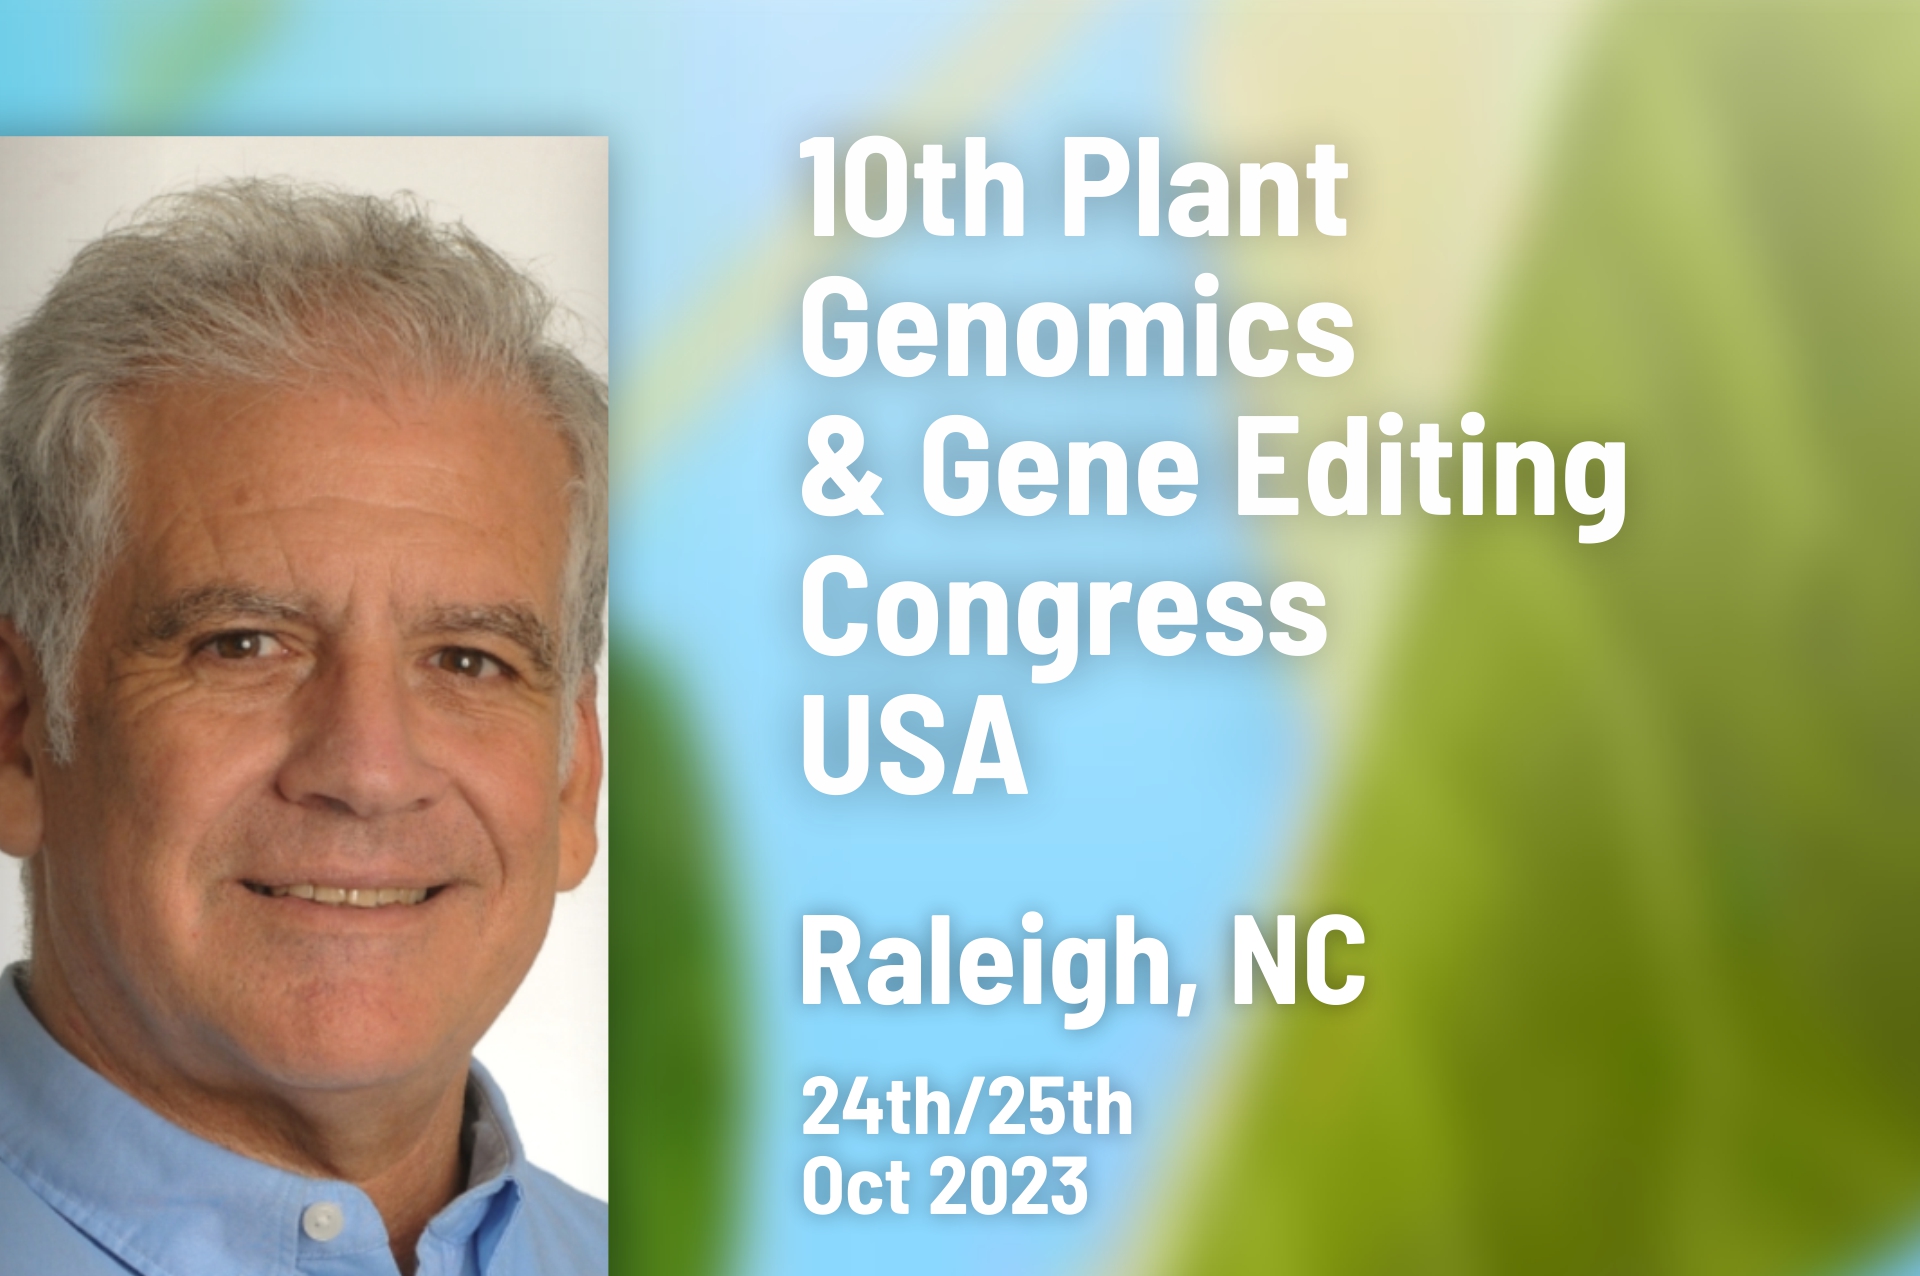 Plant Genomics & Gene Editing Congress USA, the 10th Plant Genomics & Gene Editing Congress USA will be held in Raleigh, NC. Inbioar